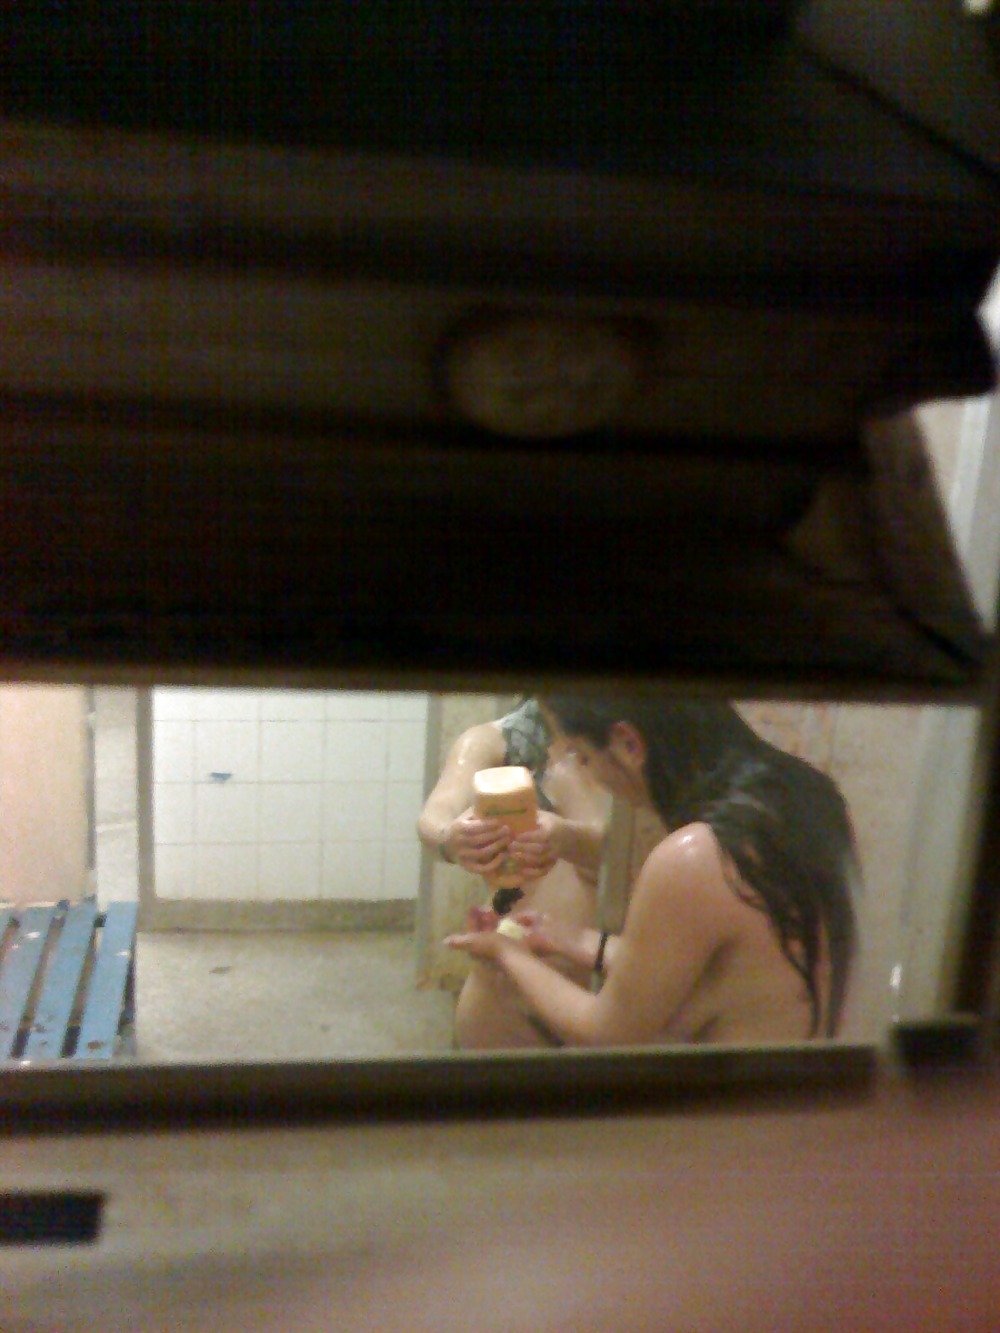 Porn image Israeli Army Girls - Shower Voyeur - 16.02.10